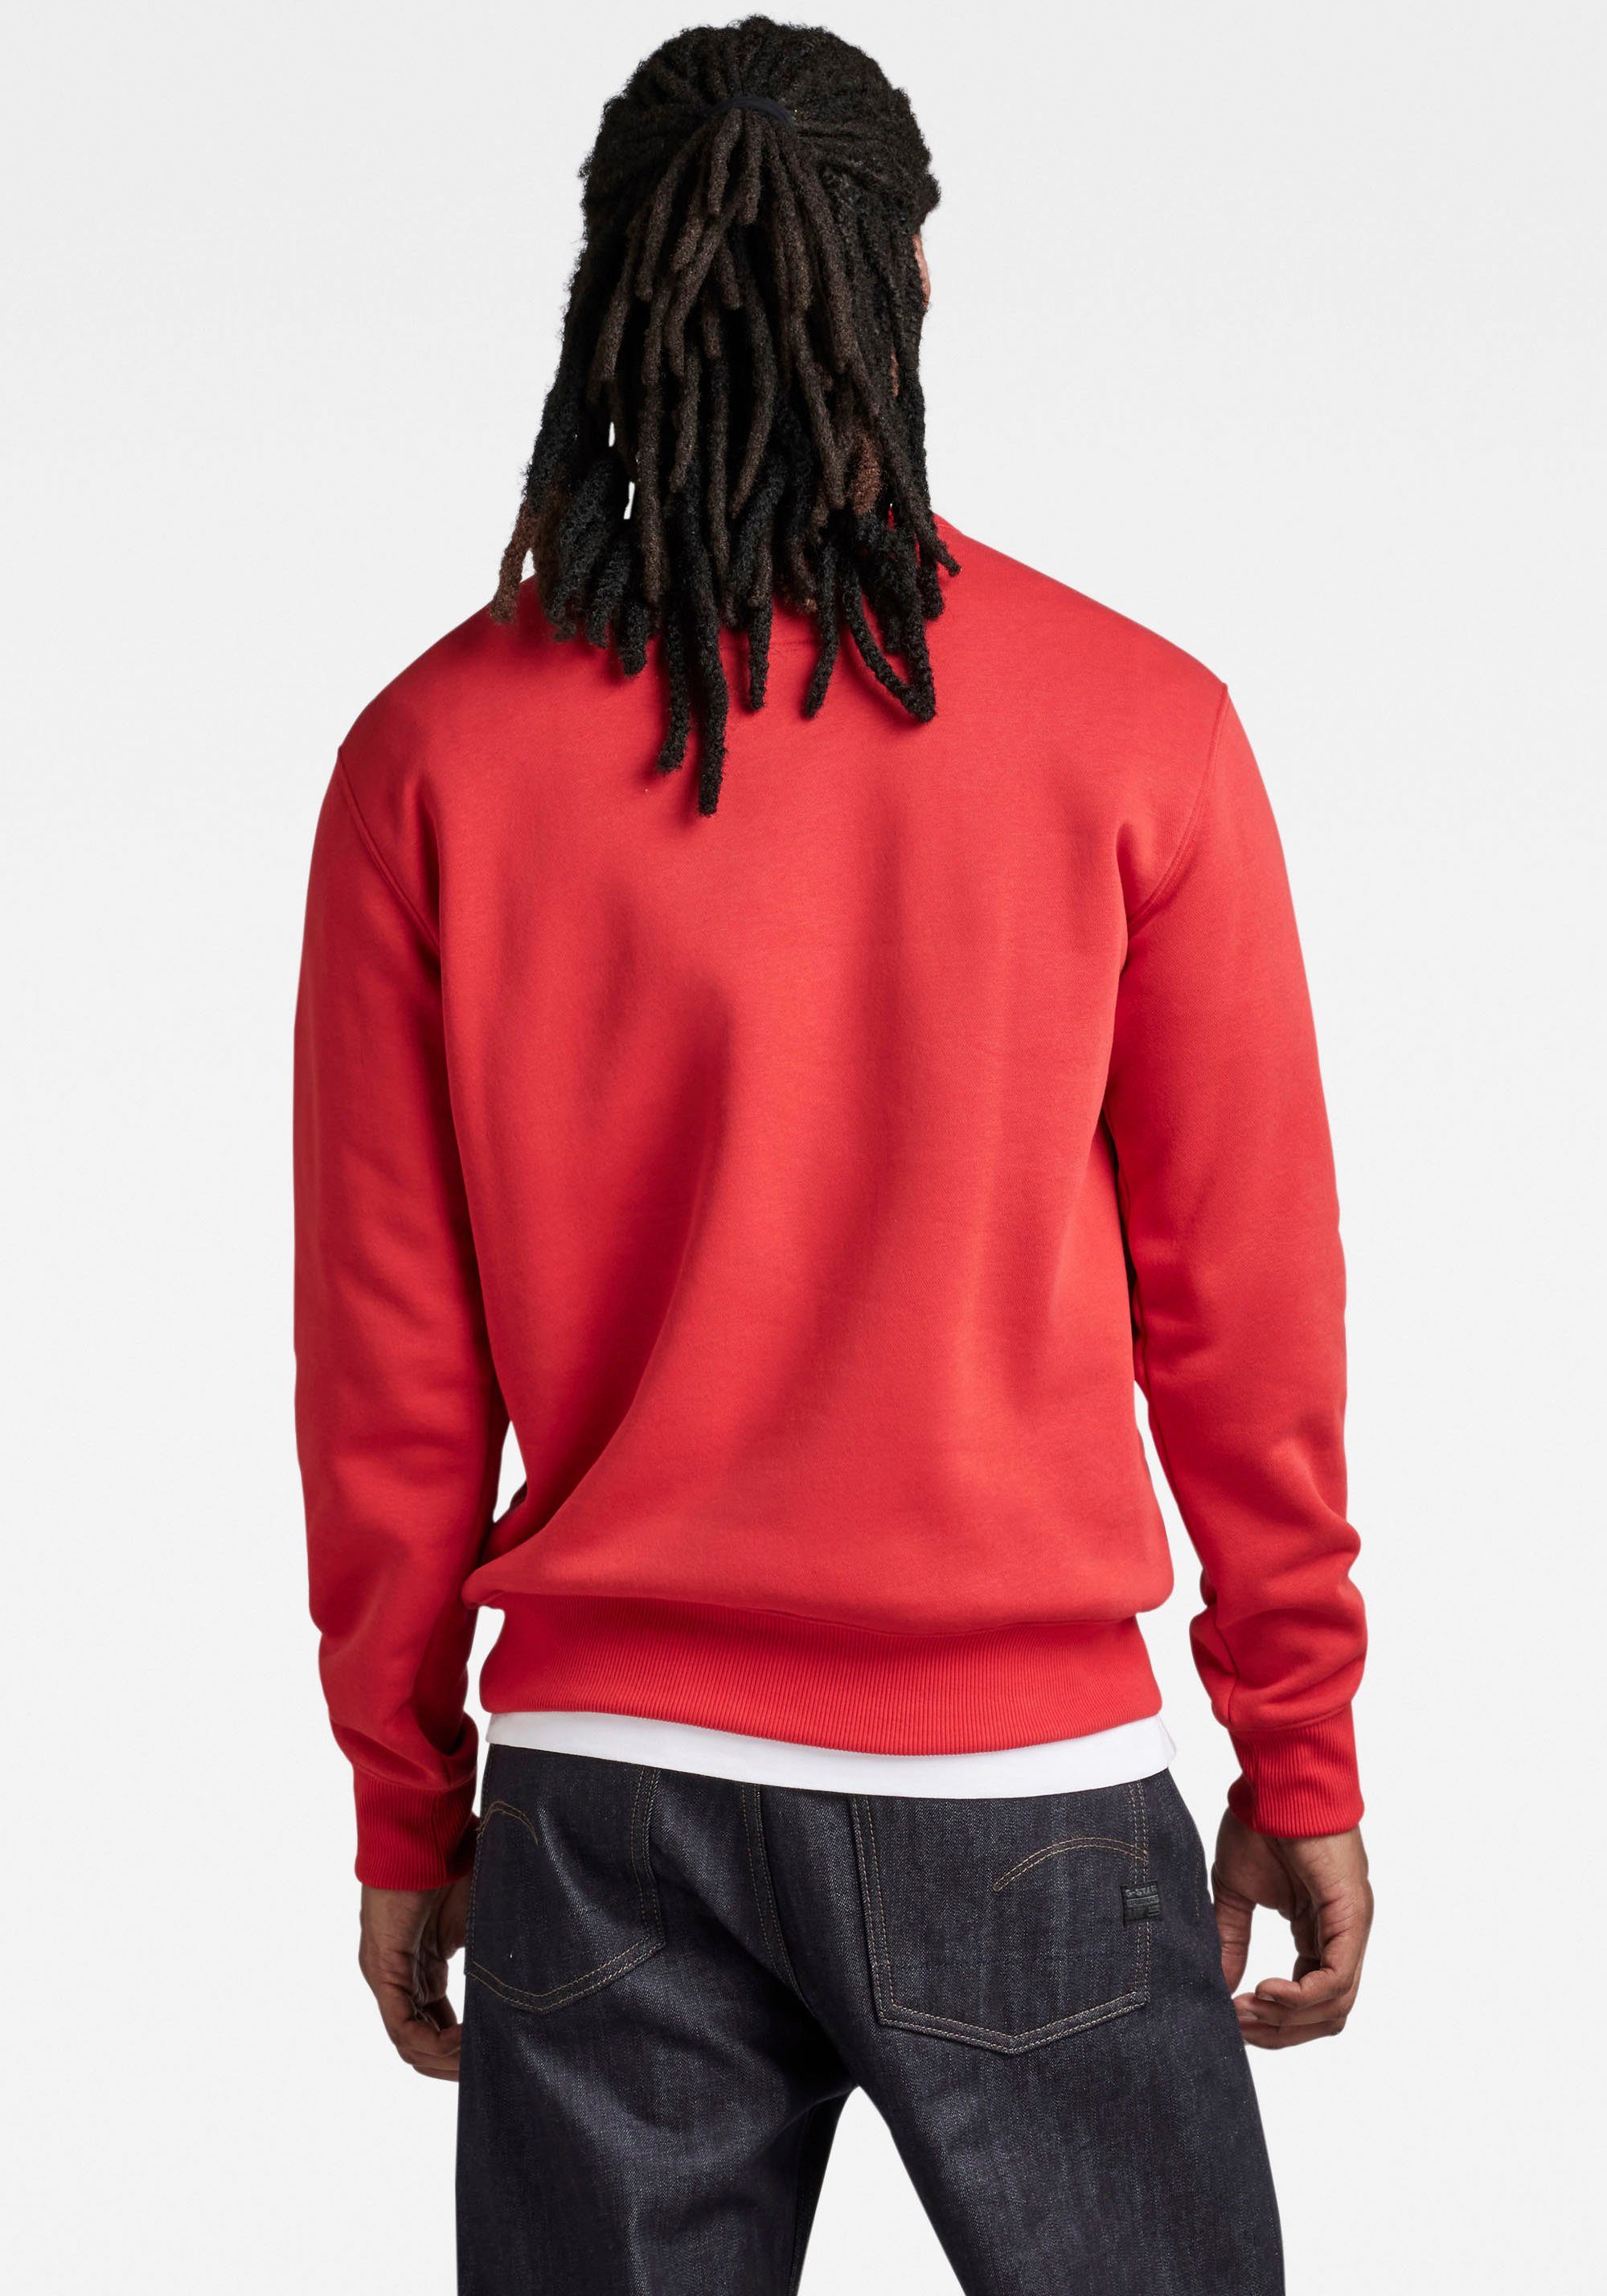 G-Star RAW Sweatshirt Sweatshirt Originals Red Acid